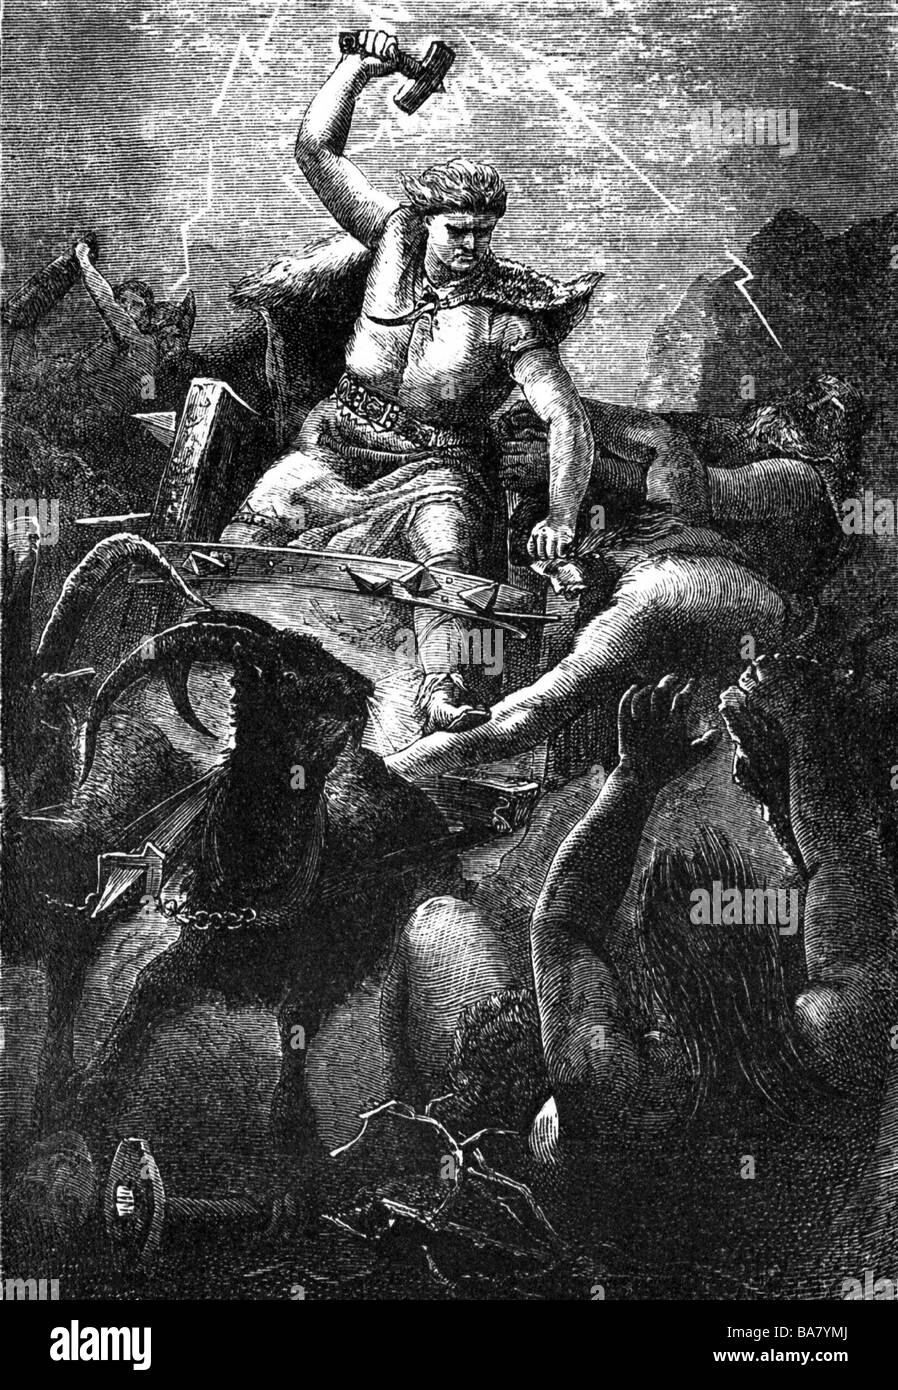 Thor, Germanic god of thunder, szene, beating with his hammer, wood engraving, 19th century, Stock Photo